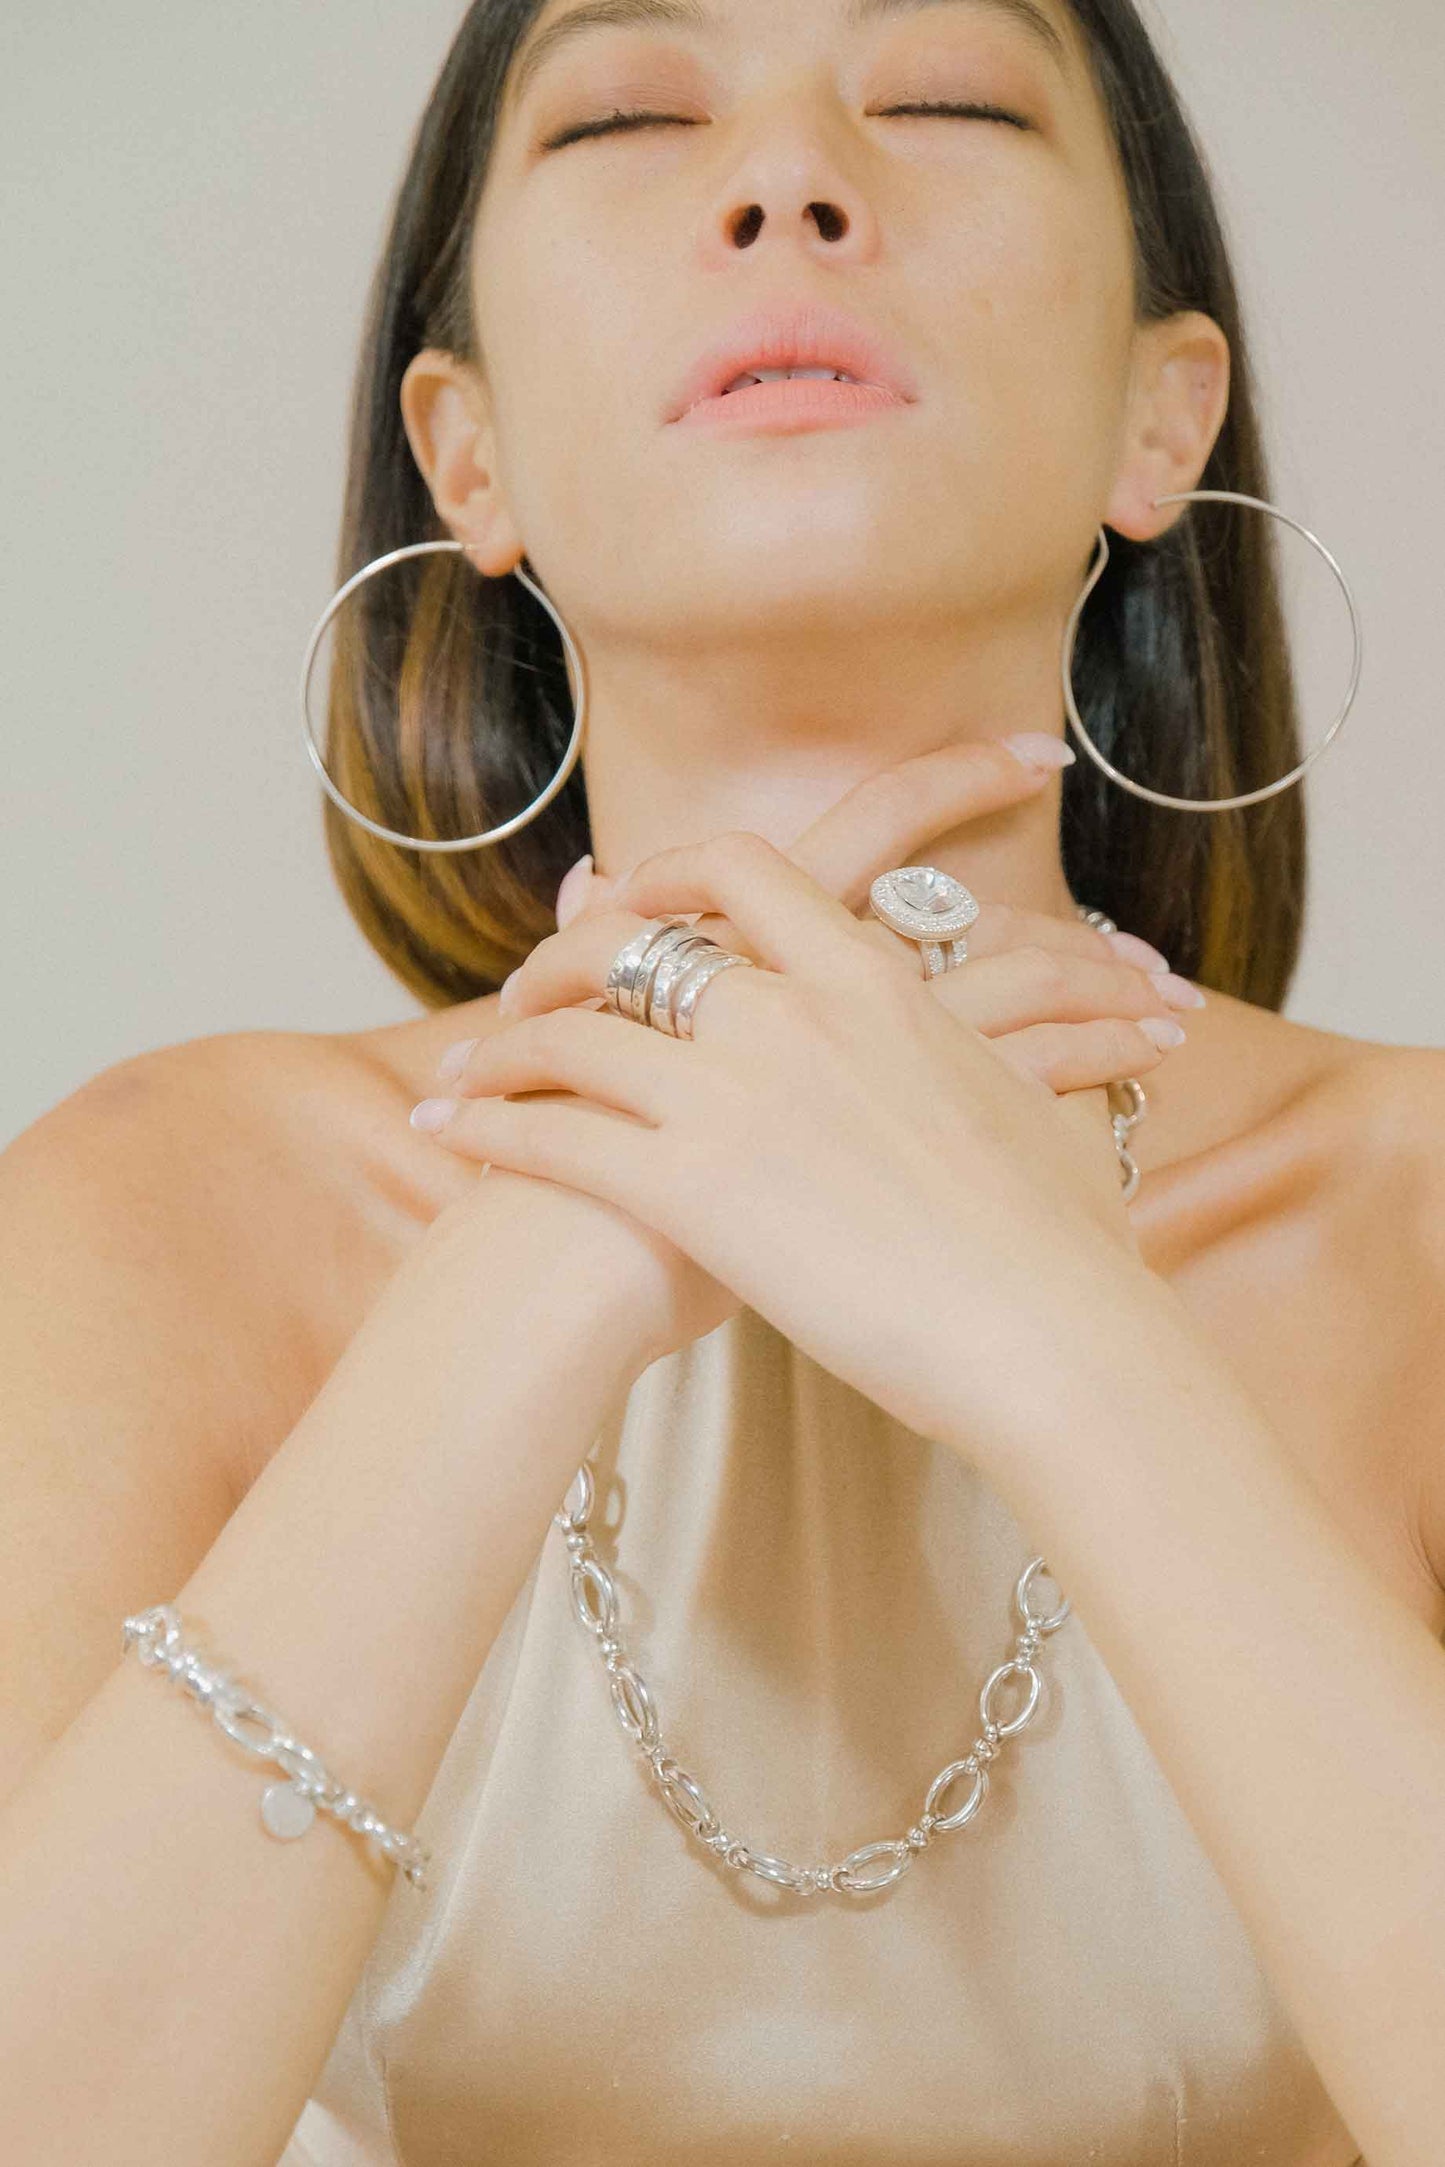 Danil Chain Necklace - Reva Jewellery